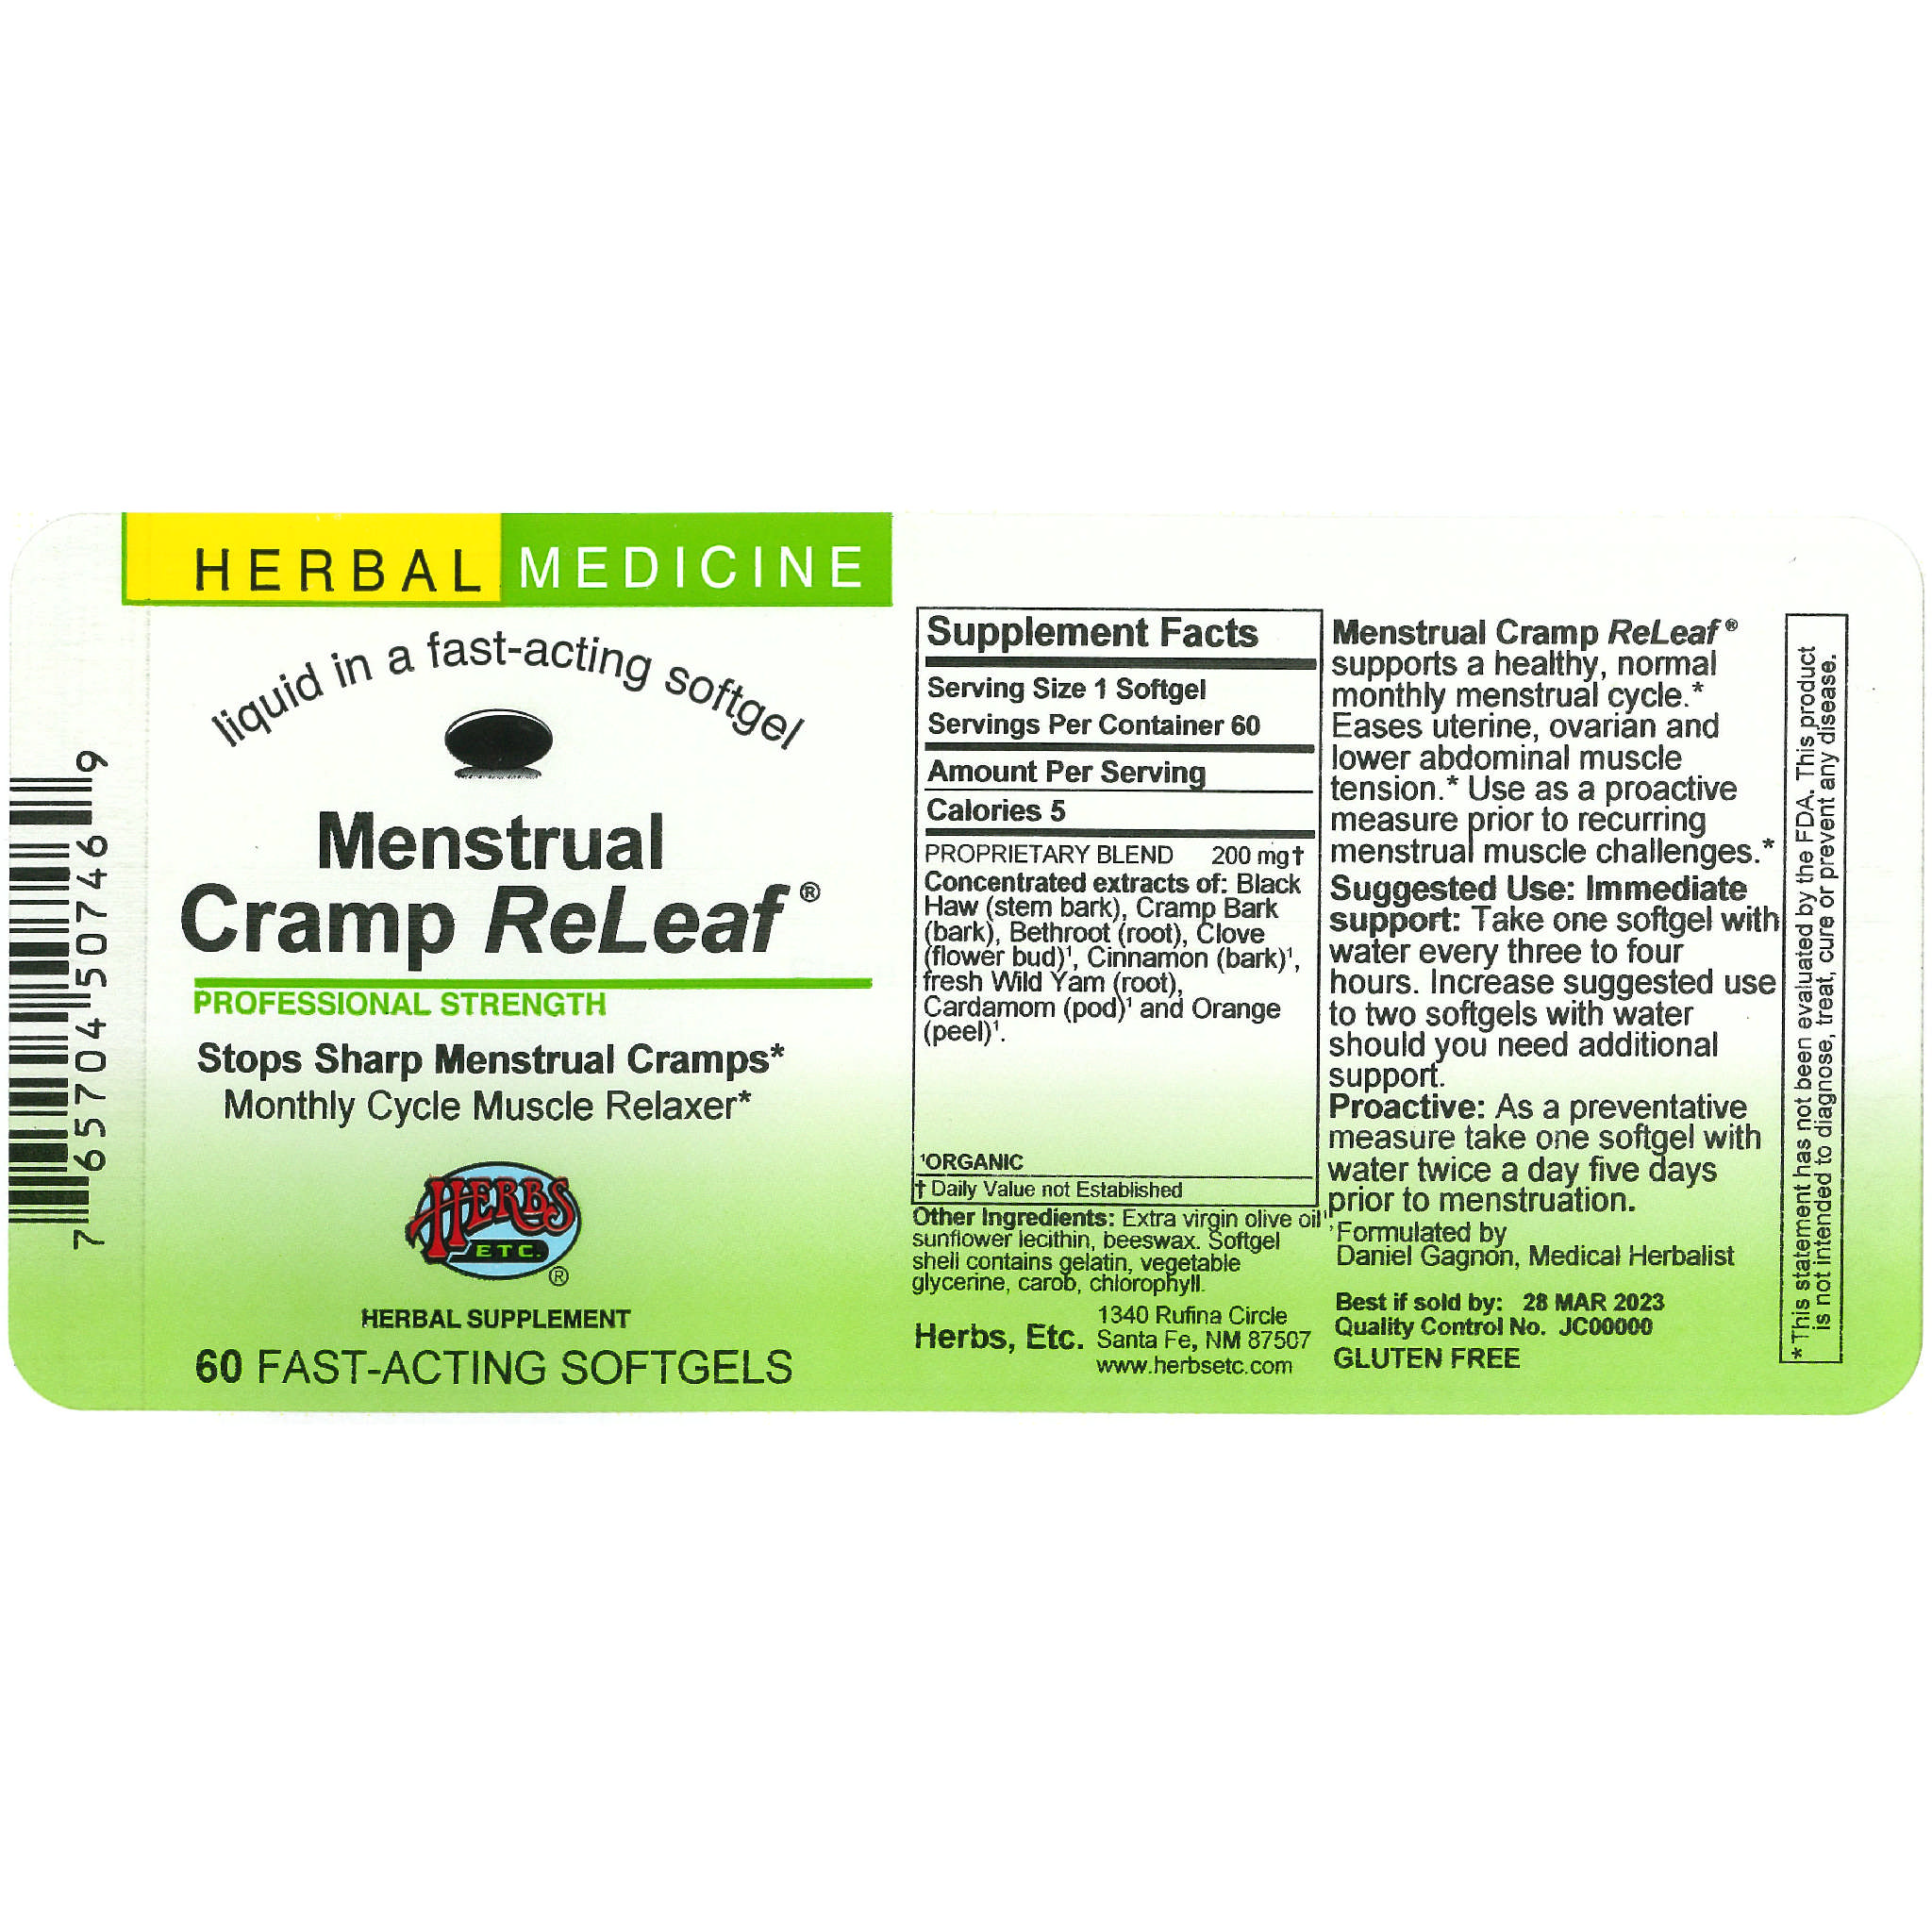 Herbs Etc - Cramp Releaf Menstrual softgel